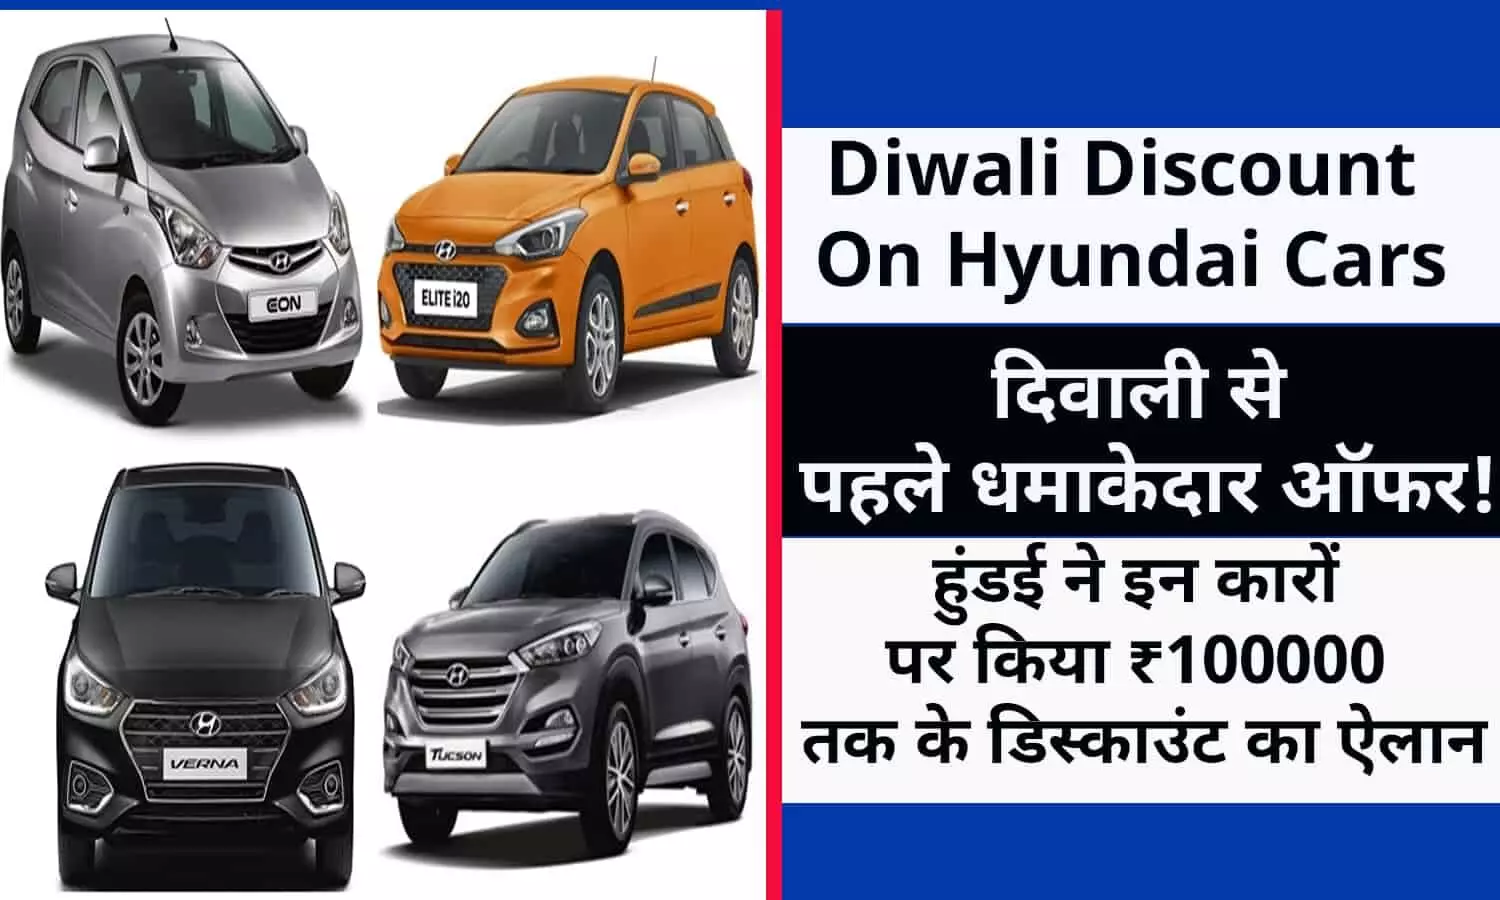 Diwali Discount On Hyundai Cars